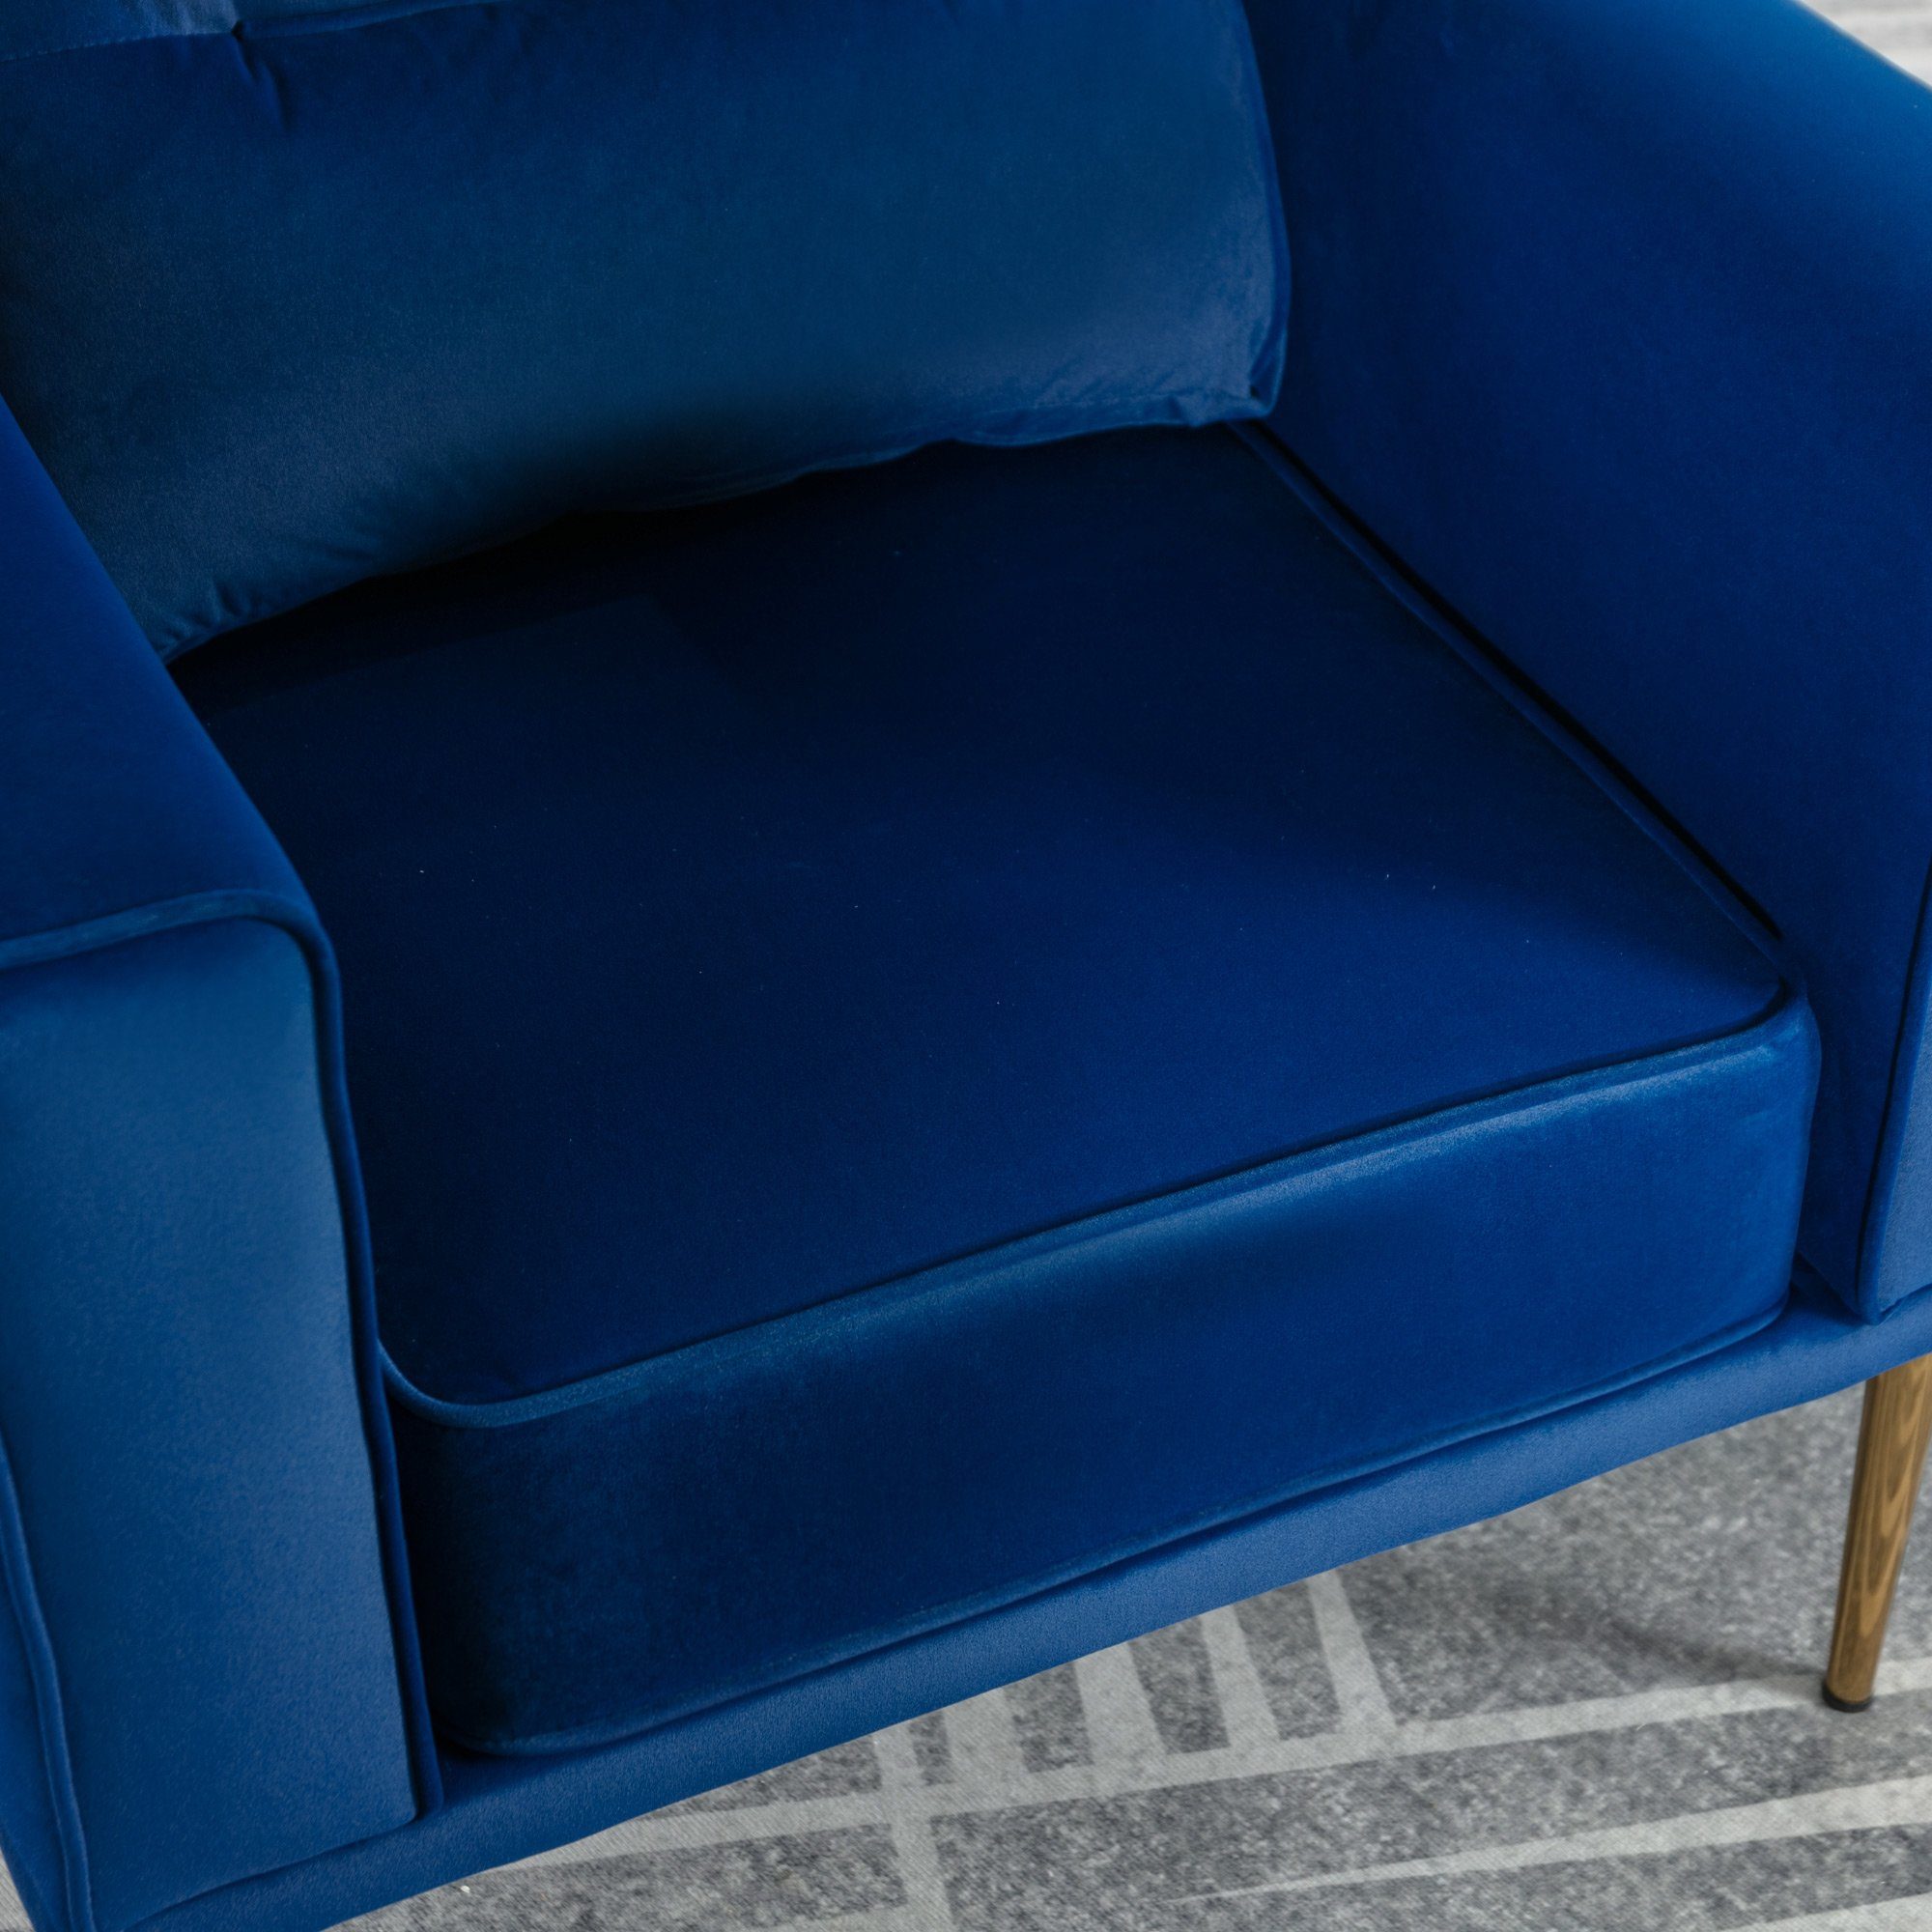 Fernsehsessel, Sessel Sessel Sitzkissen), WISHDOR und Loungesessel, Relaxsessel, lässiger Relaxstuhl, einfacher Polster moderner Samtstuhl (Sessel mit blau